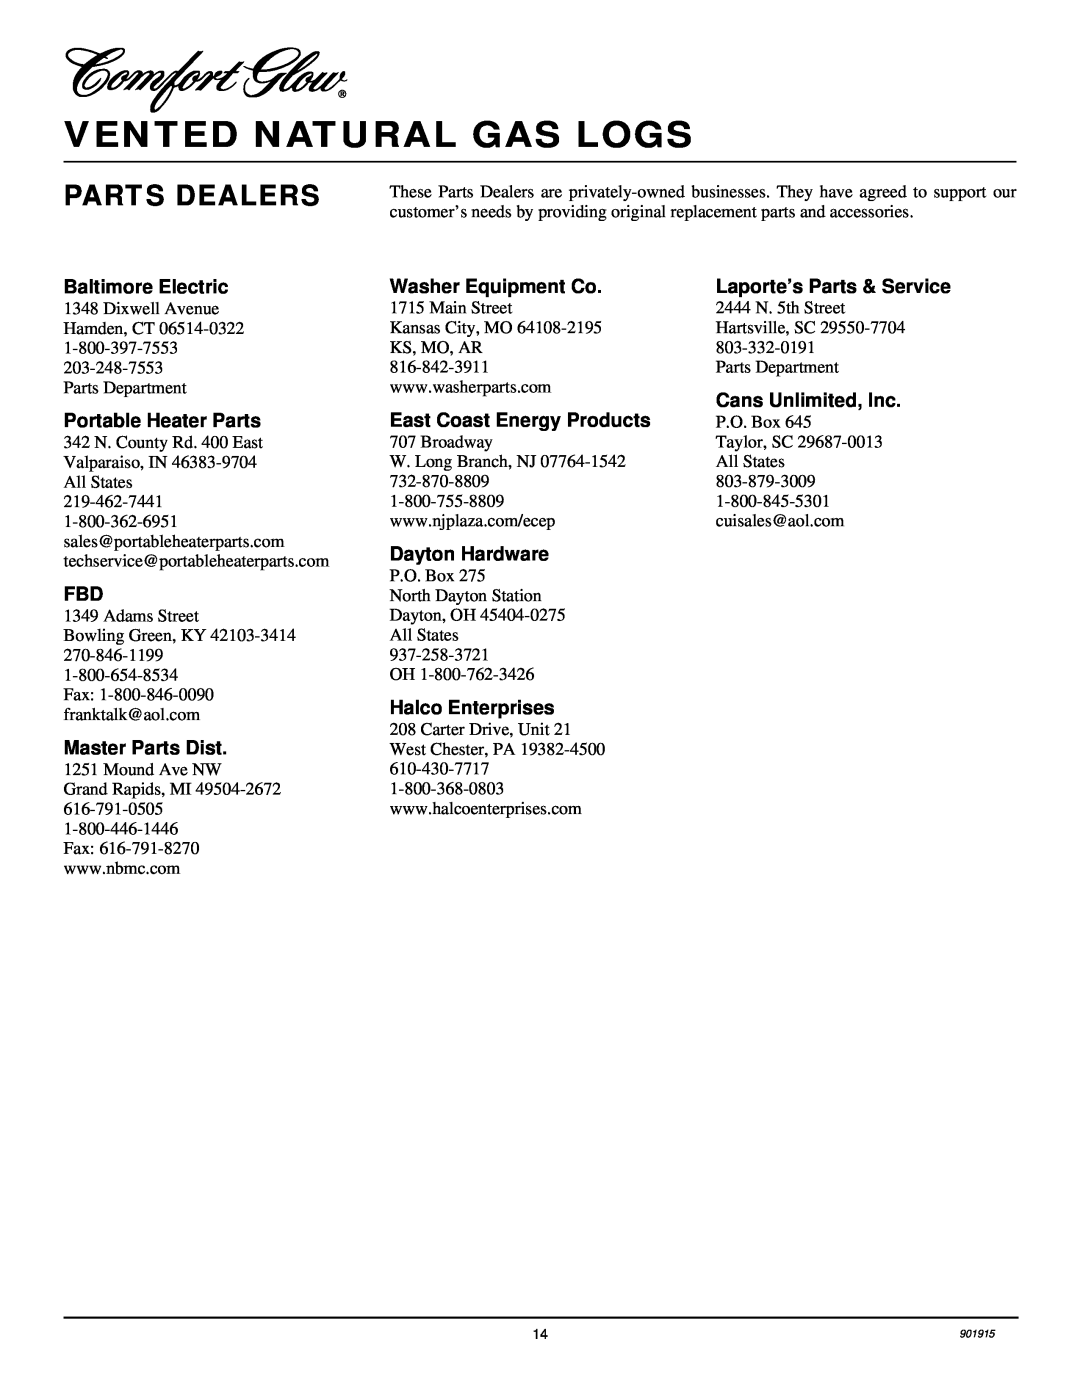 Desa HFVMR18, HFVMR24 Parts Dealers, Vented Natural Gas Logs, Baltimore Electric, Portable Heater Parts, Master Parts Dist 